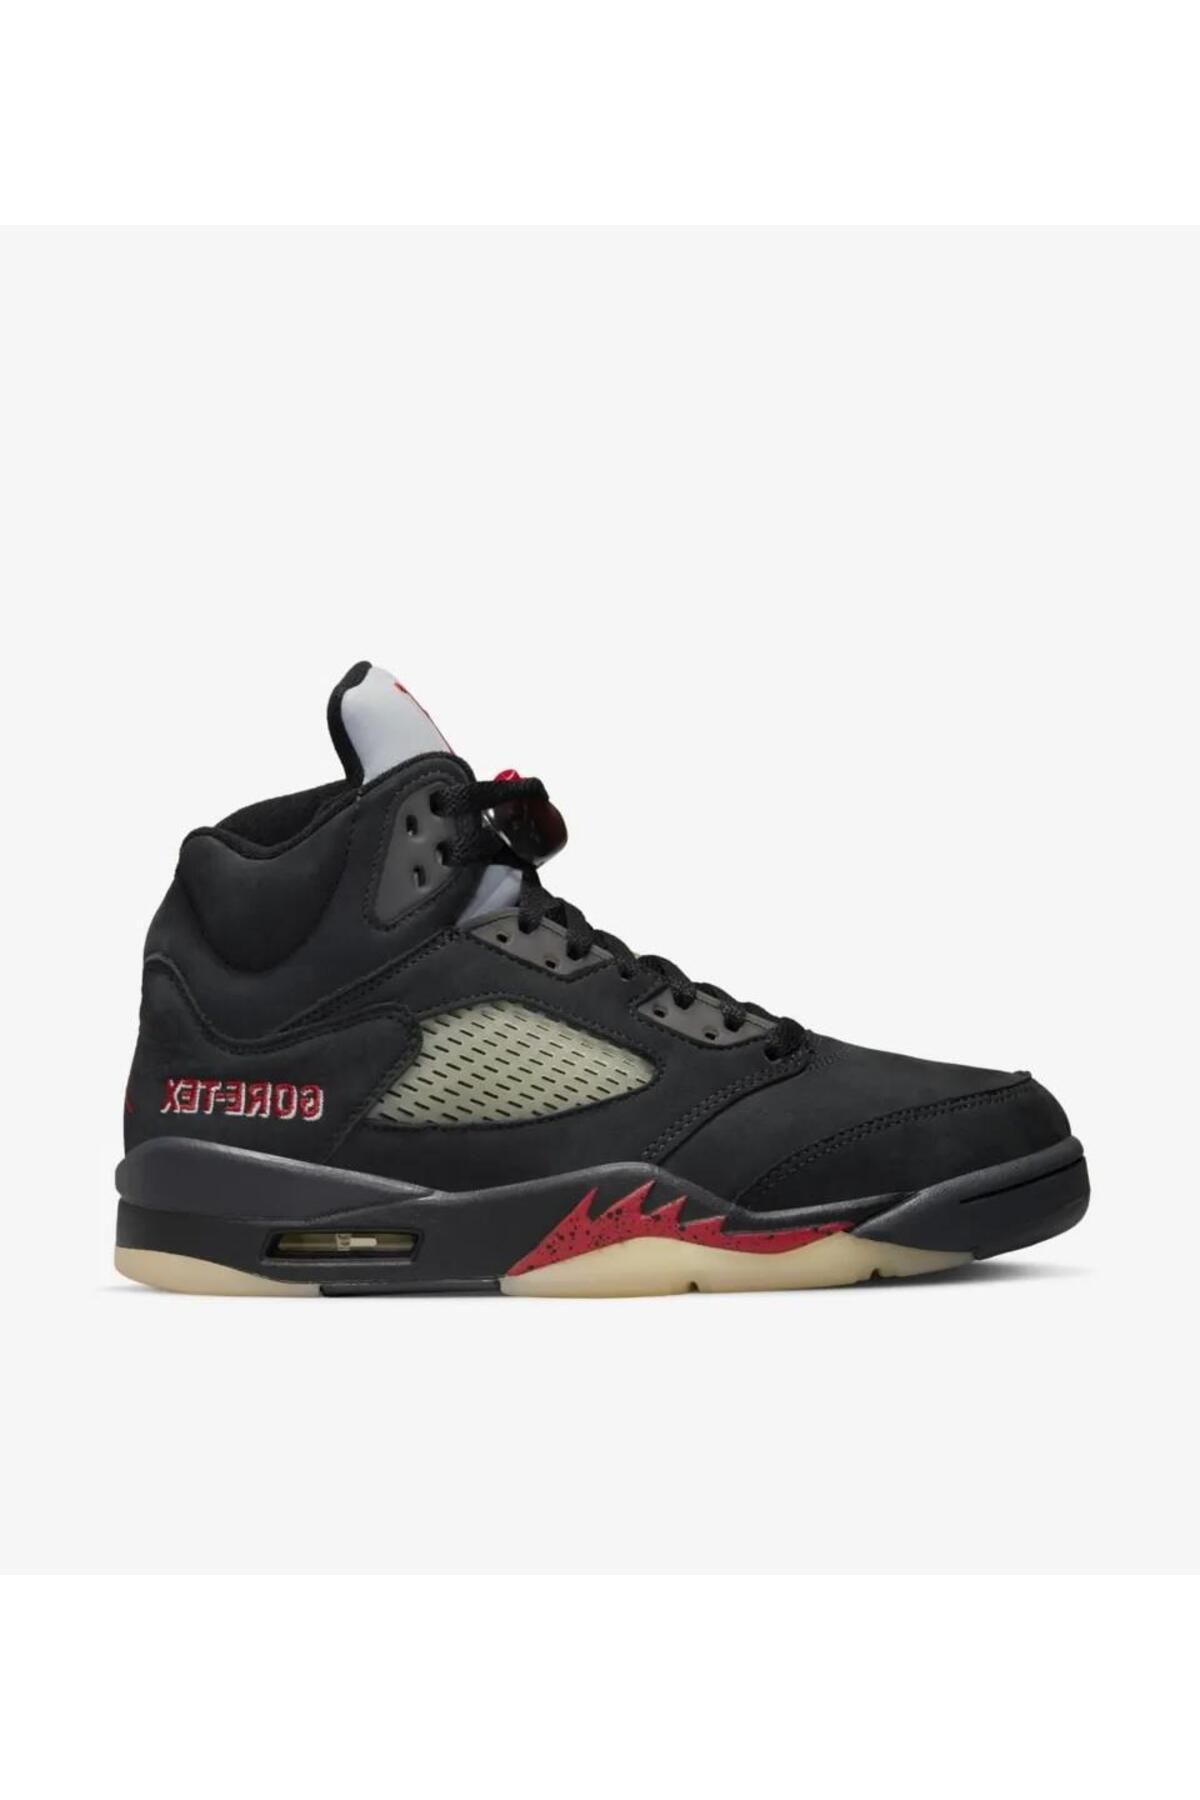 Nike Air Jordan 5 Gore-tex Off-noir Dr0092-001 Erkek Basketbol Ayakkabısı